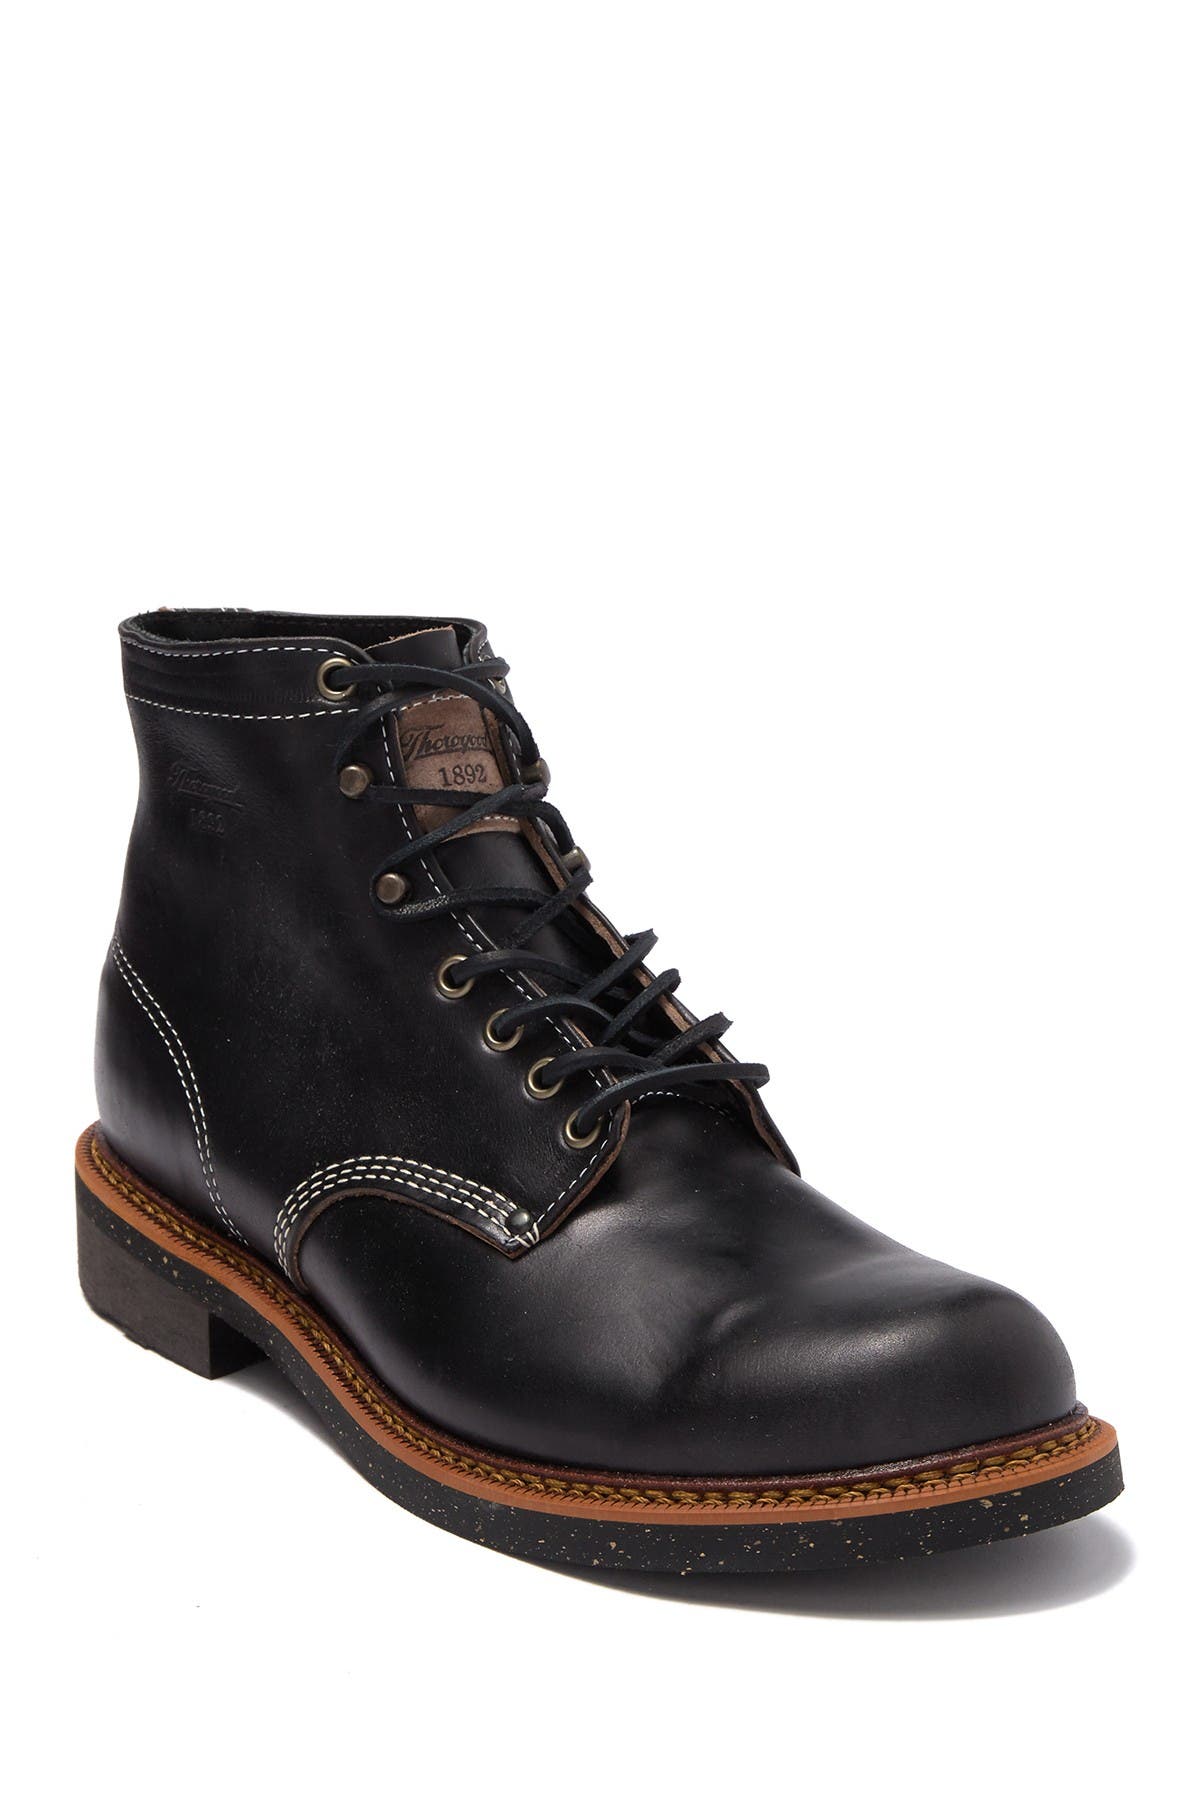 Thorogood | Beloit Leather Boot 